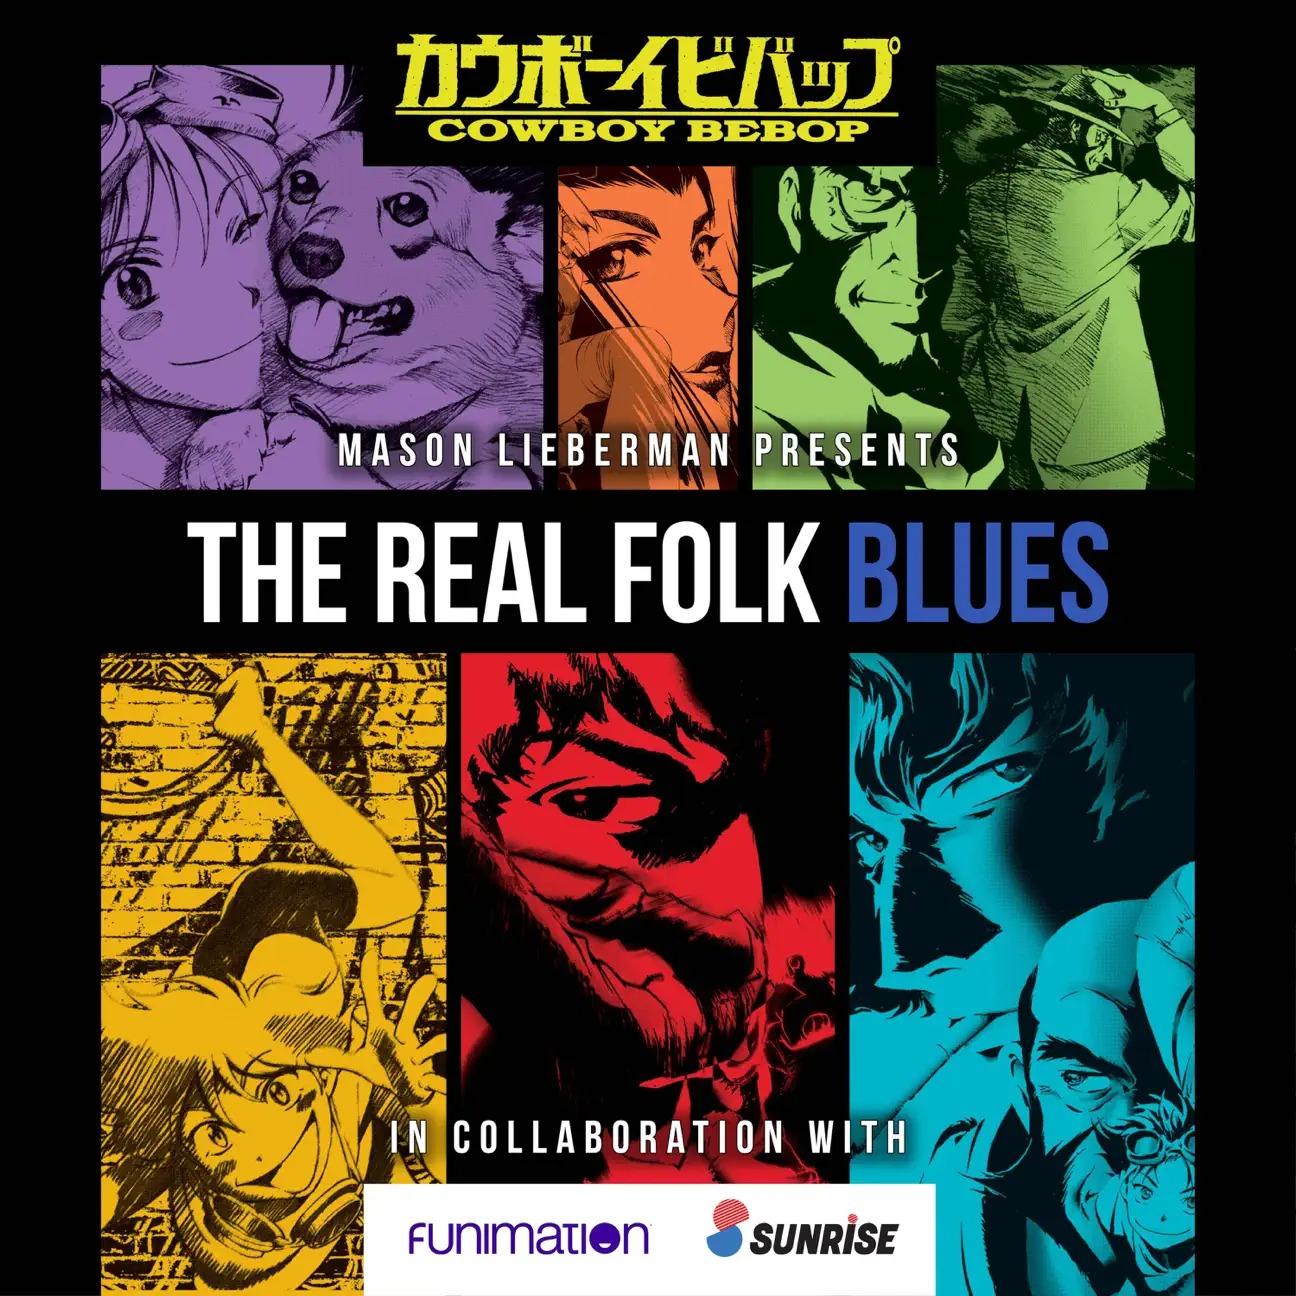 Cowboy Bebop - Mason Lieberman presents The Real Folk Blues